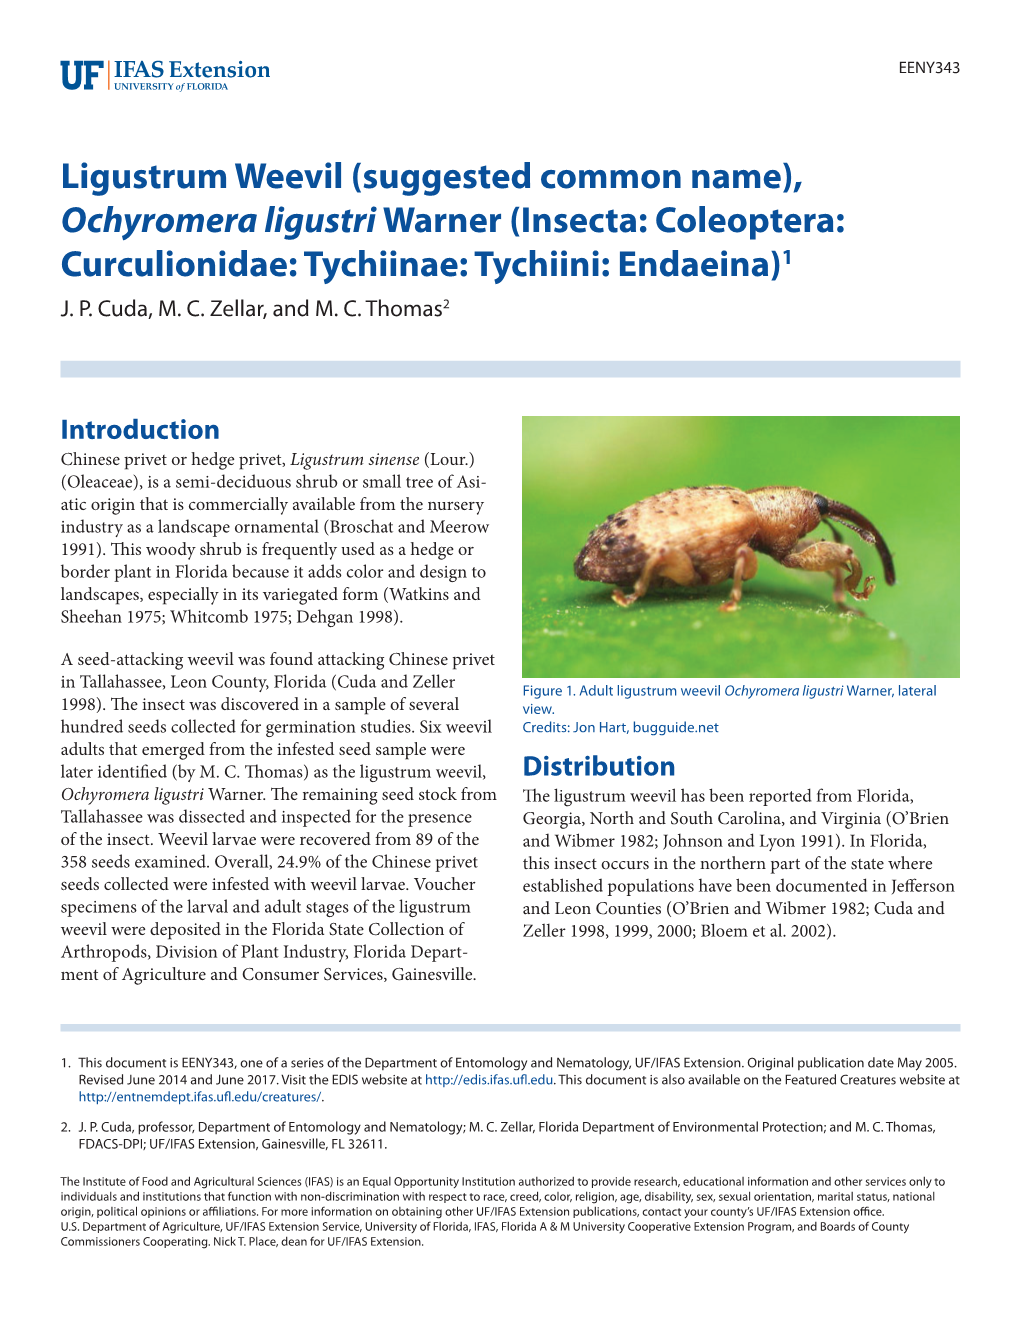 Ligustrum Weevil (Suggested Common Name), Ochyromera Ligustri Warner (Insecta: Coleoptera: Curculionidae: Tychiinae: Tychiini: Endaeina)1 J